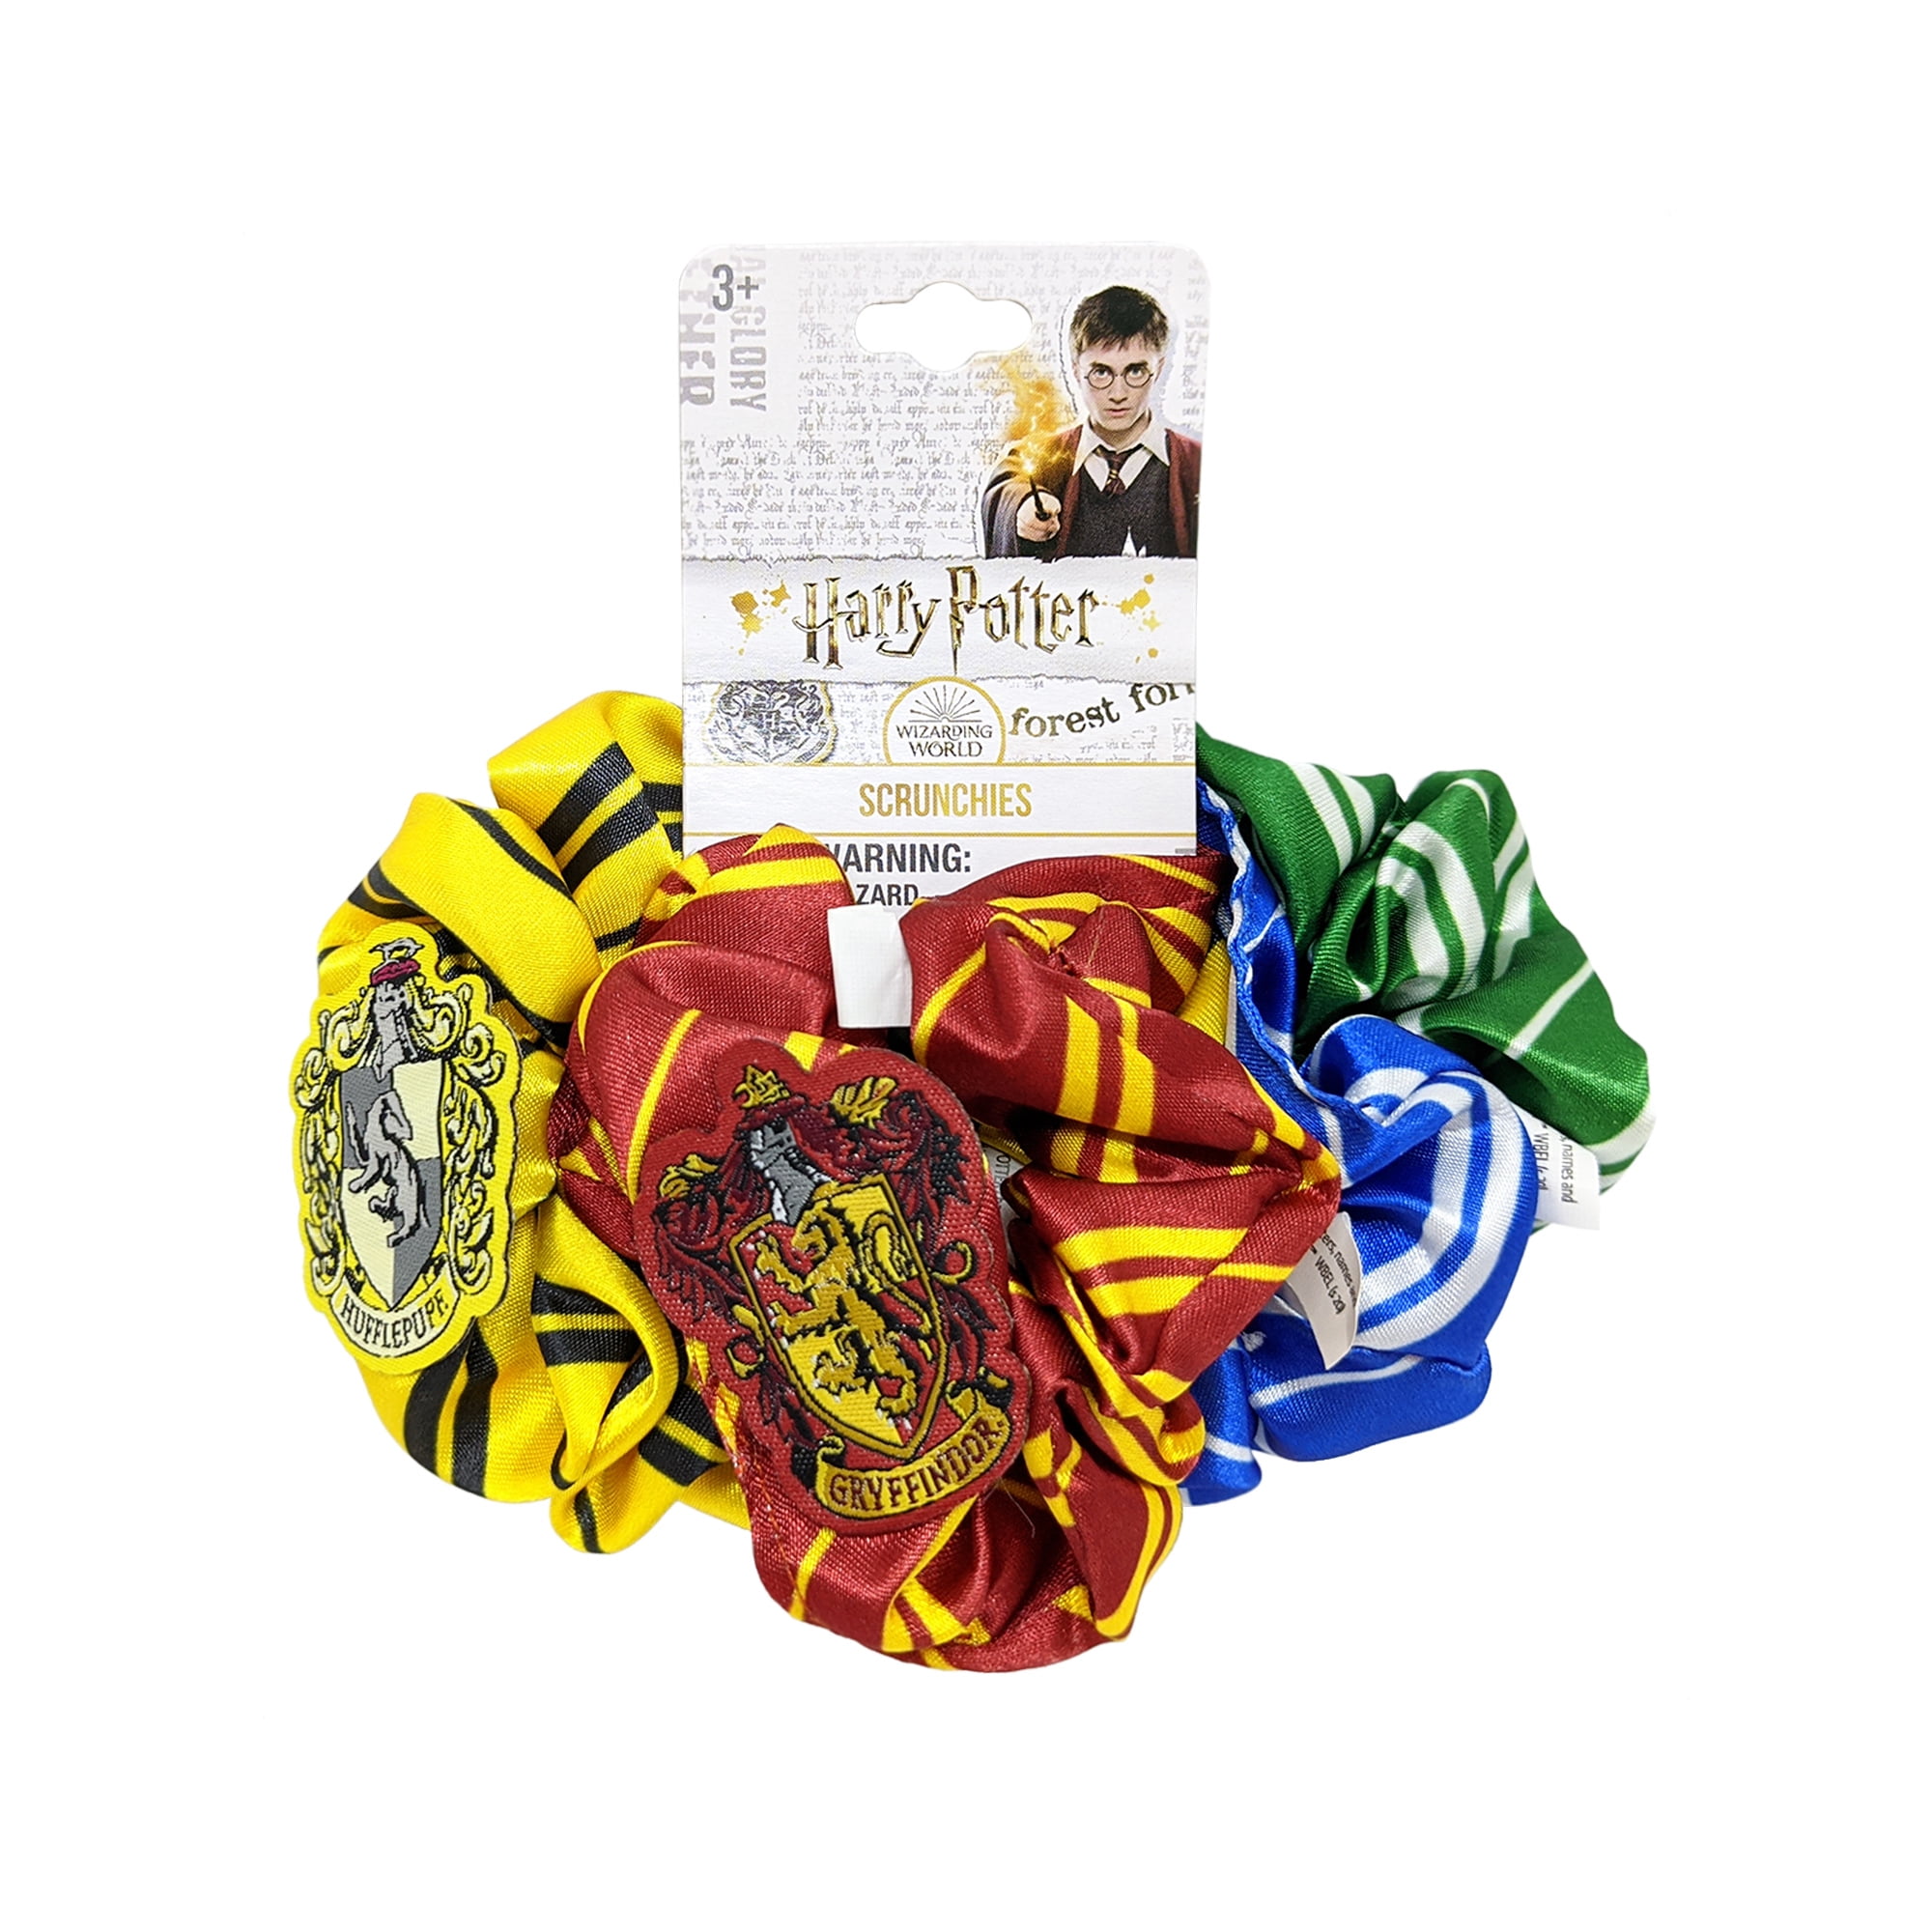 Harry Potter scrunchies